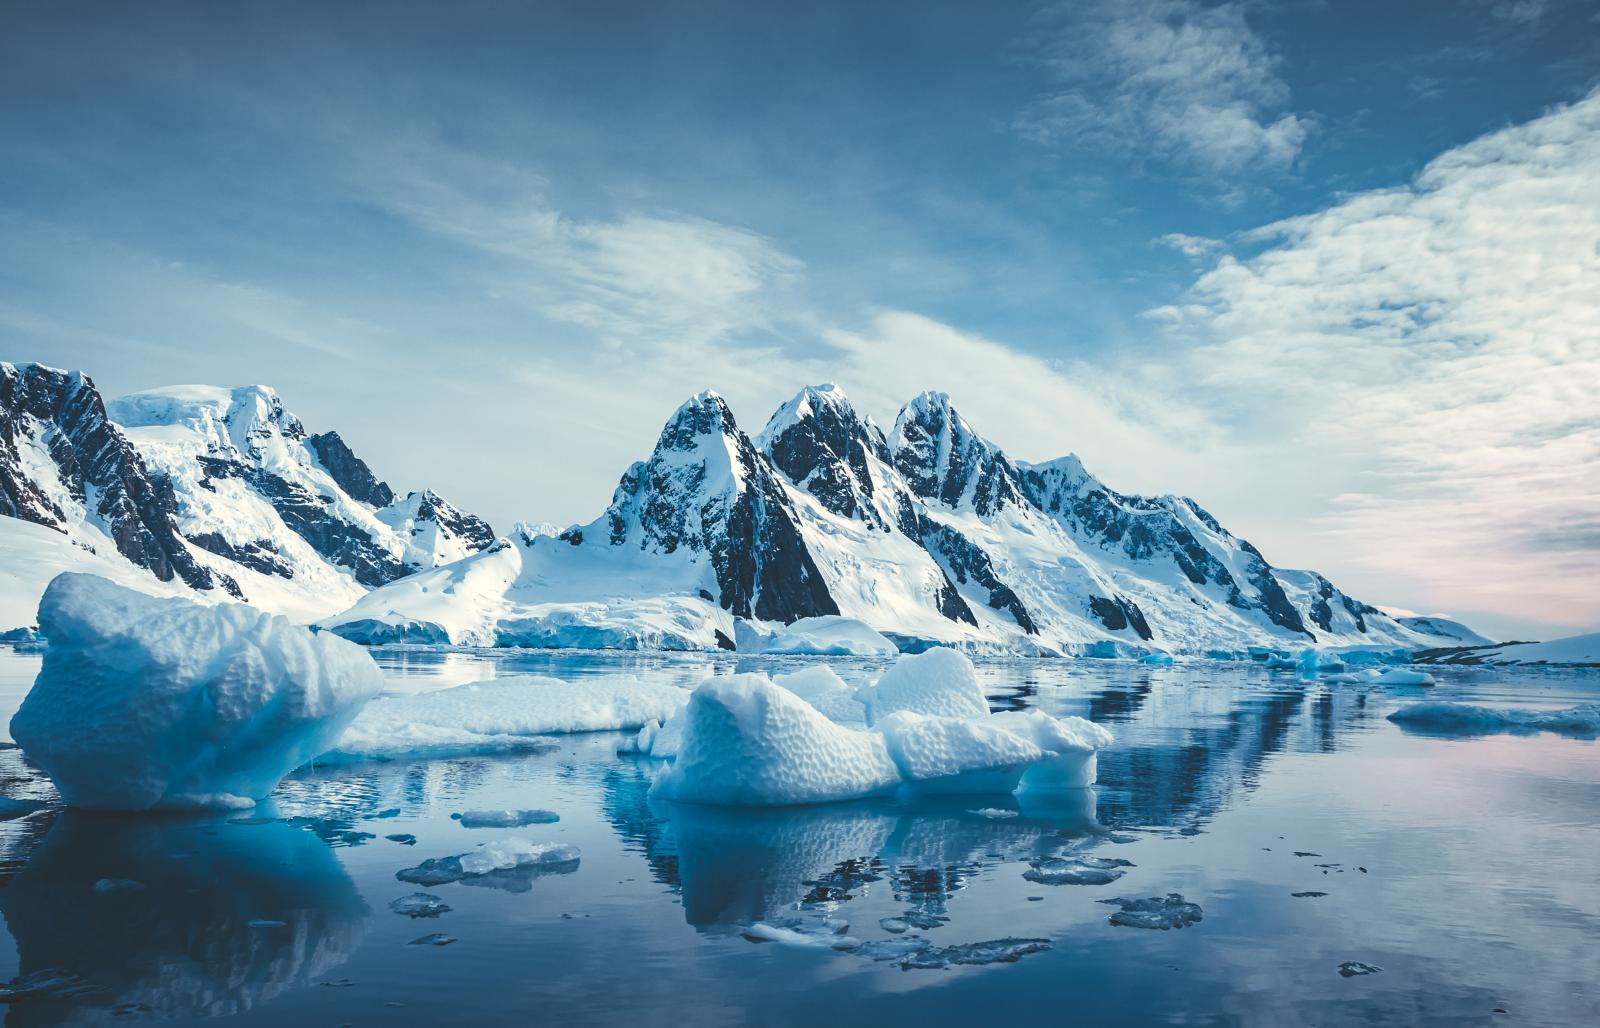 2021 Arctic Sea Ice Melt Season Outlook